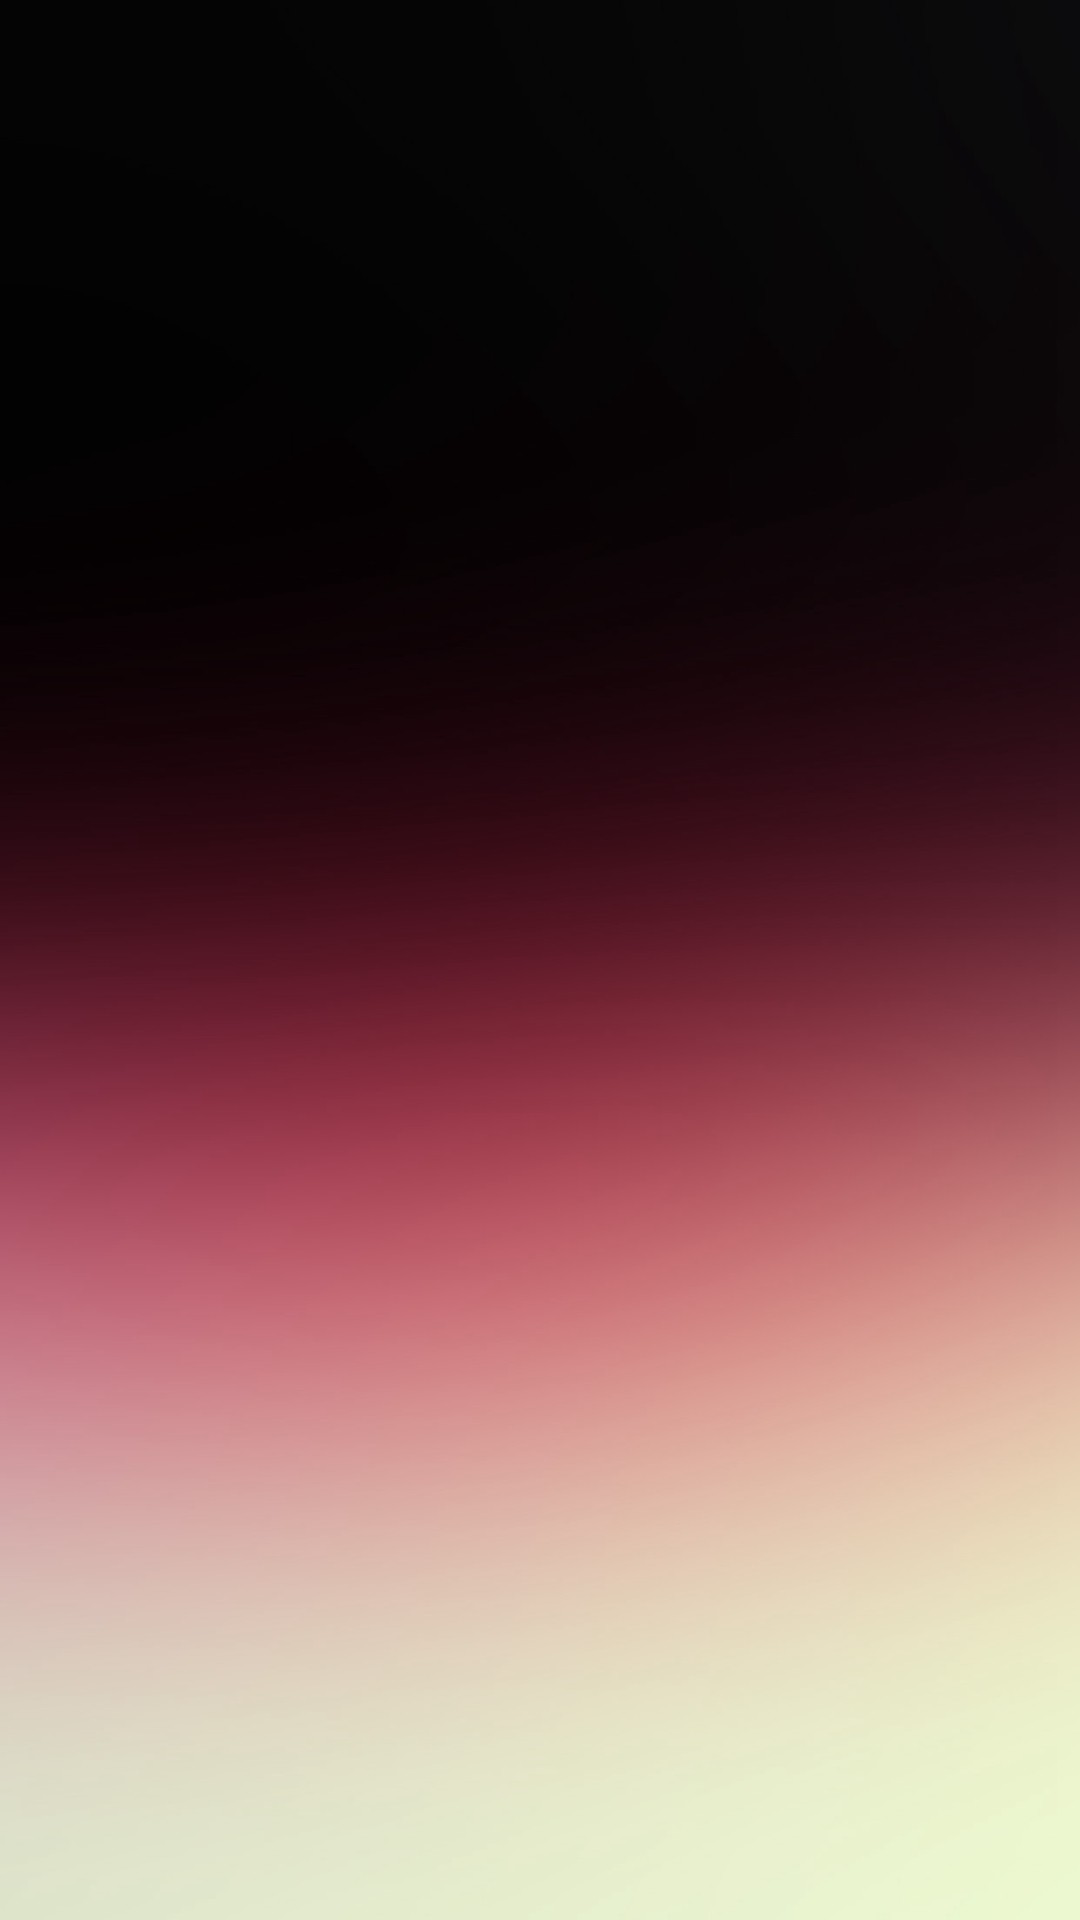 Dark Red Bokeh Gradation Blur Pink iPhone 6 Wallpaper